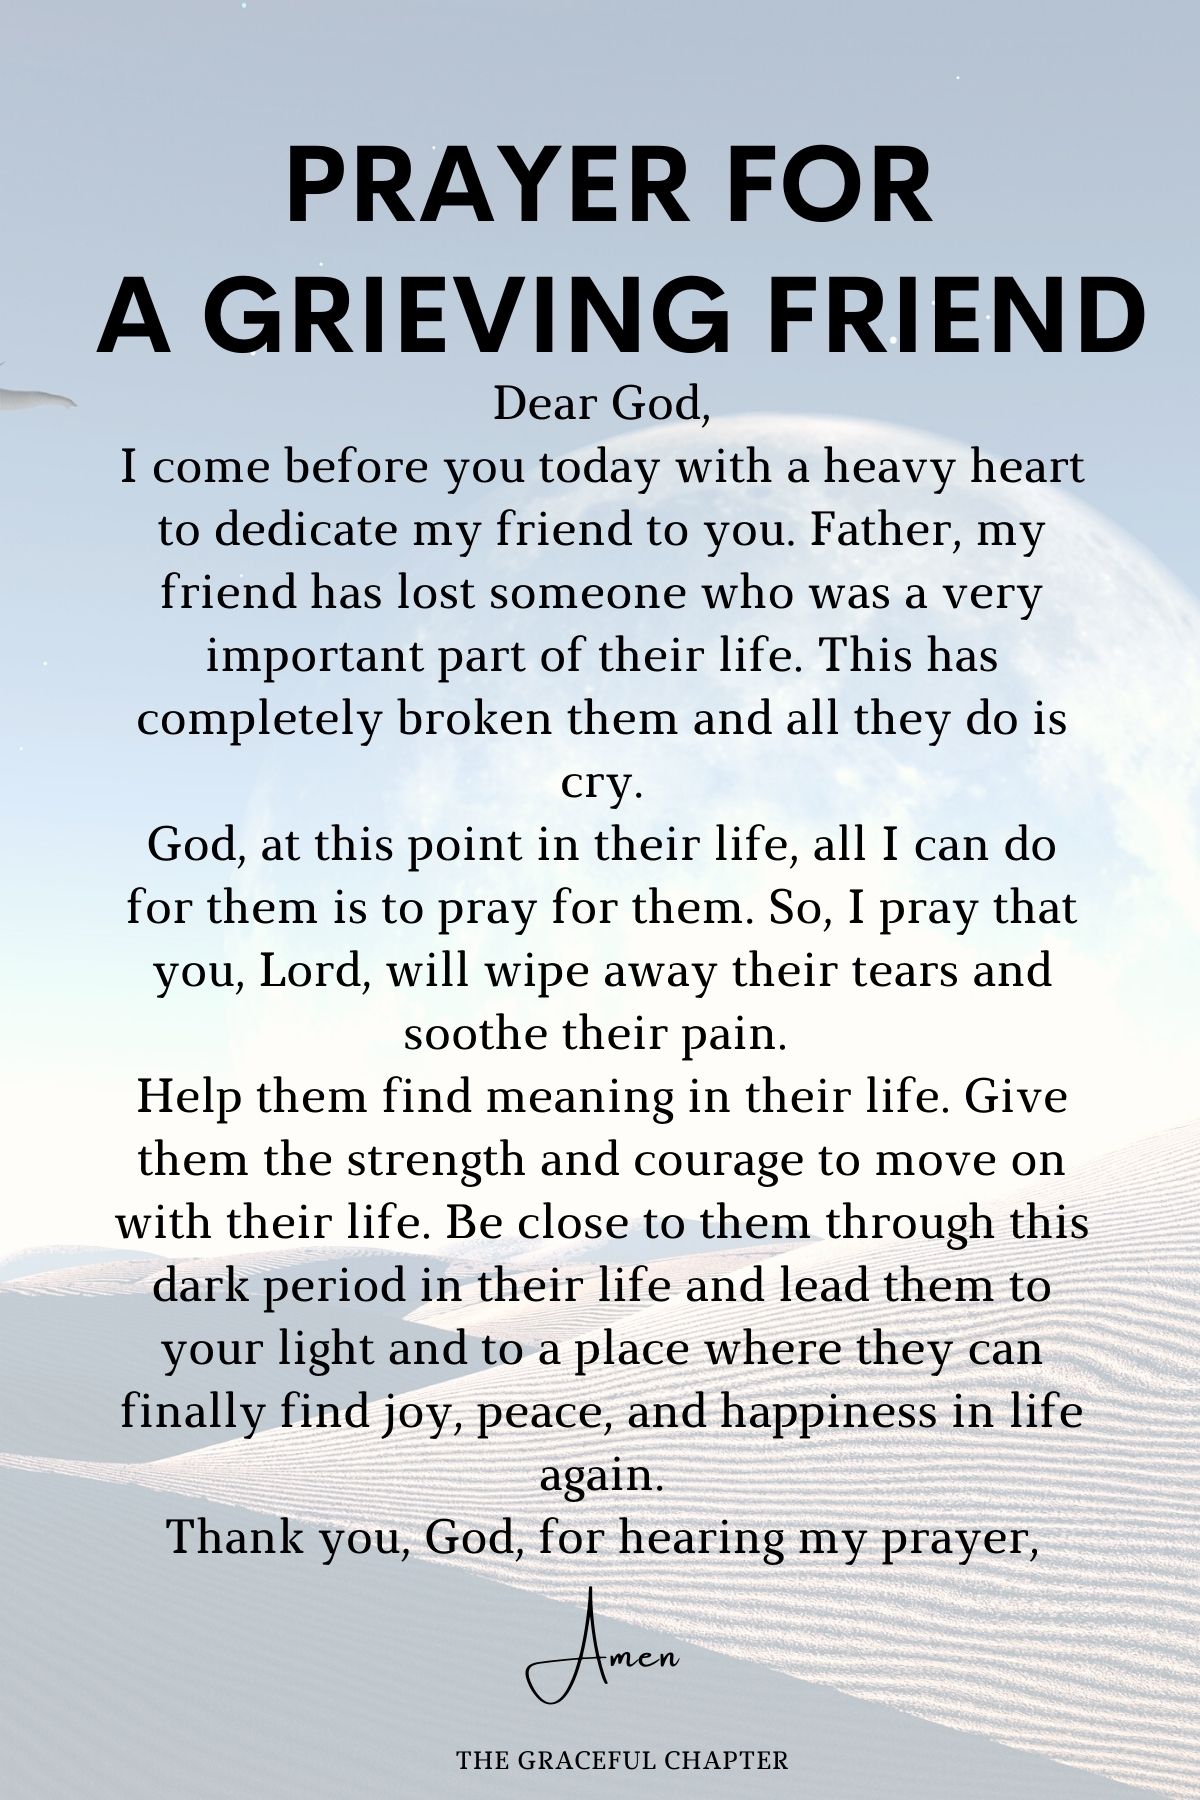 Prayer for a grieving friend